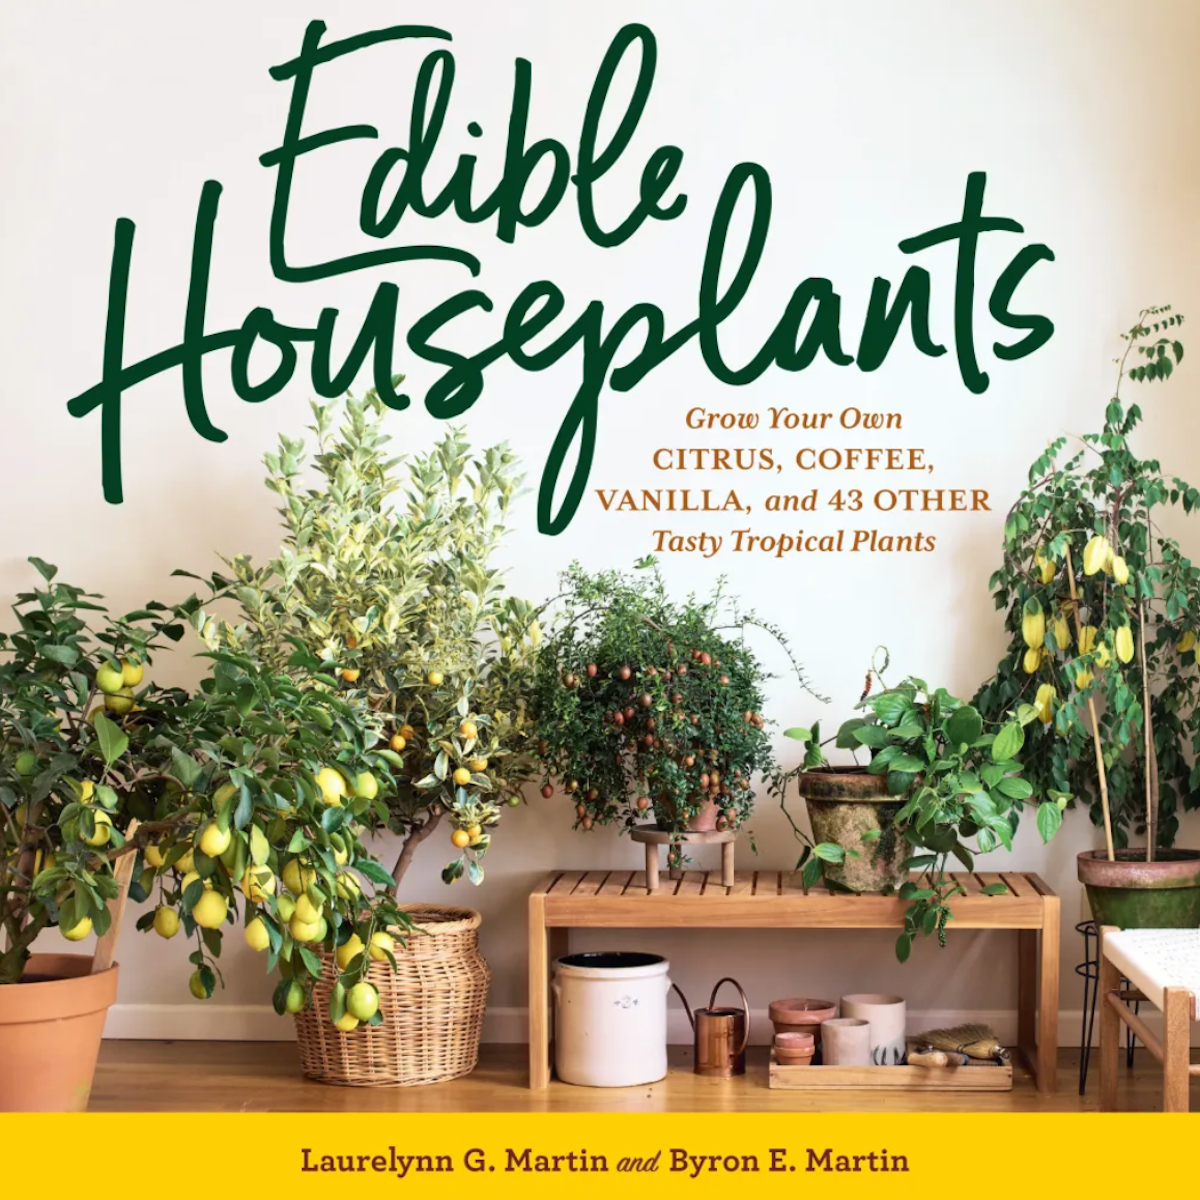 Edible Houseplants By Laurelynn G. Martin  & Byron E. Martin